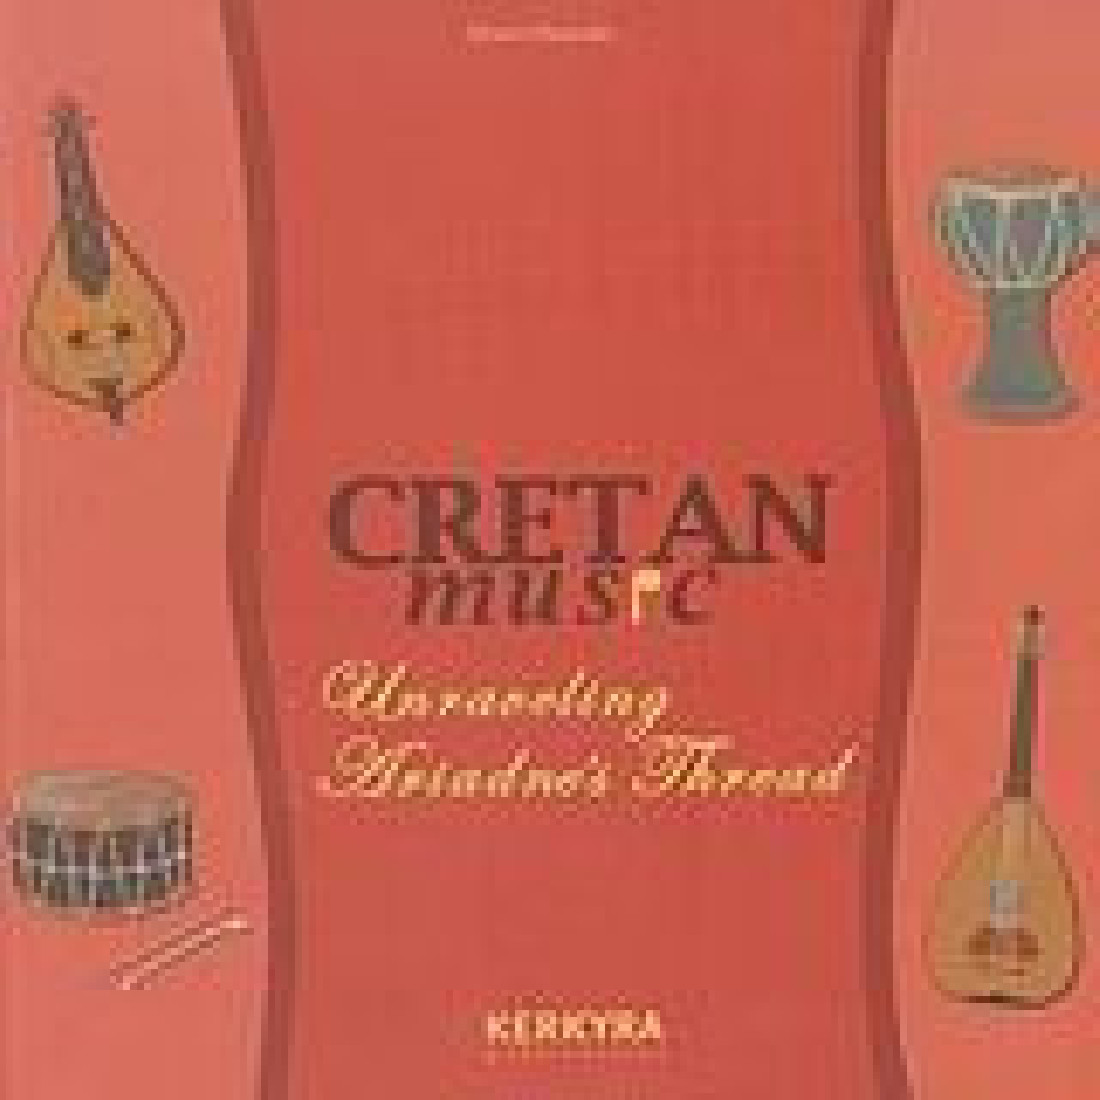 Cretan Music